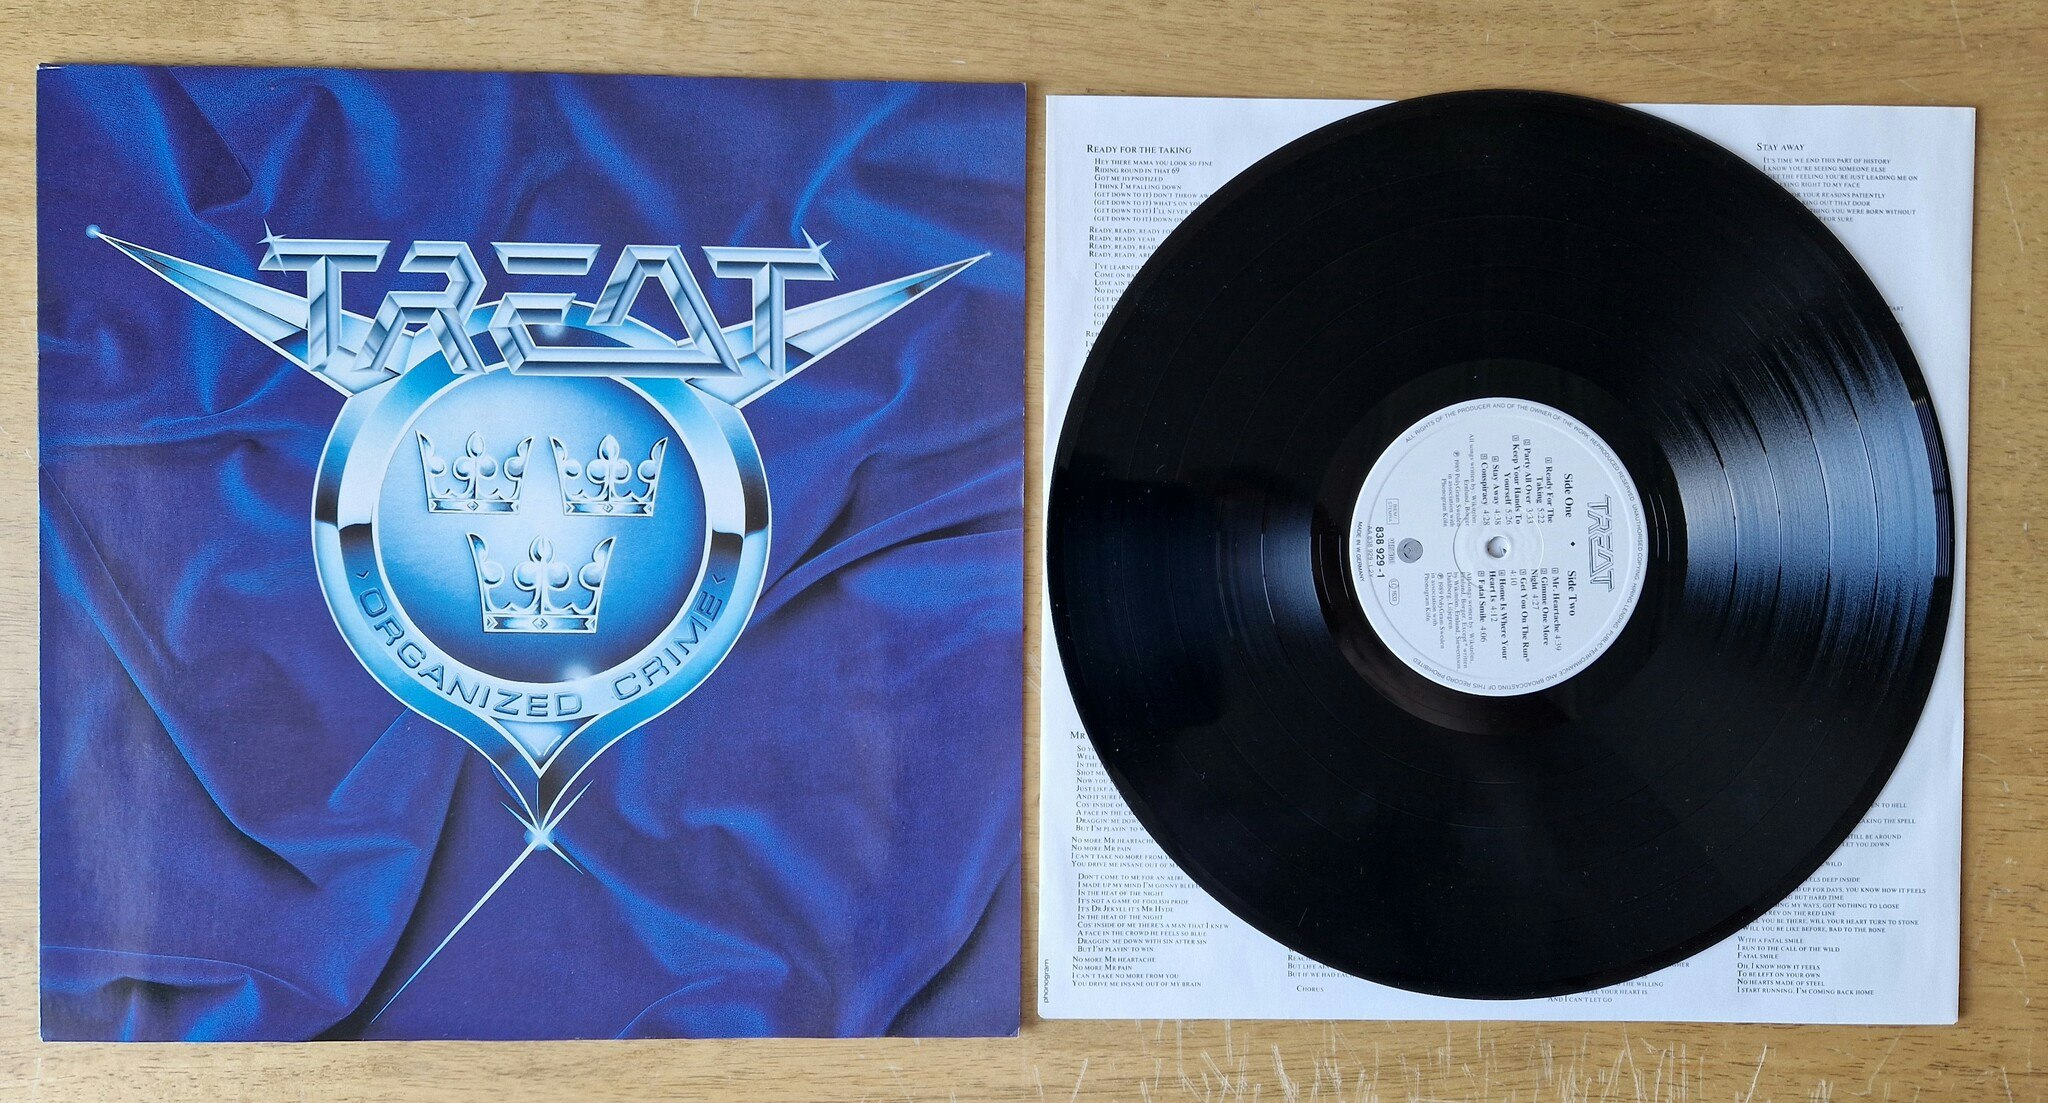 Treat, Organized crime. Vinyl LP